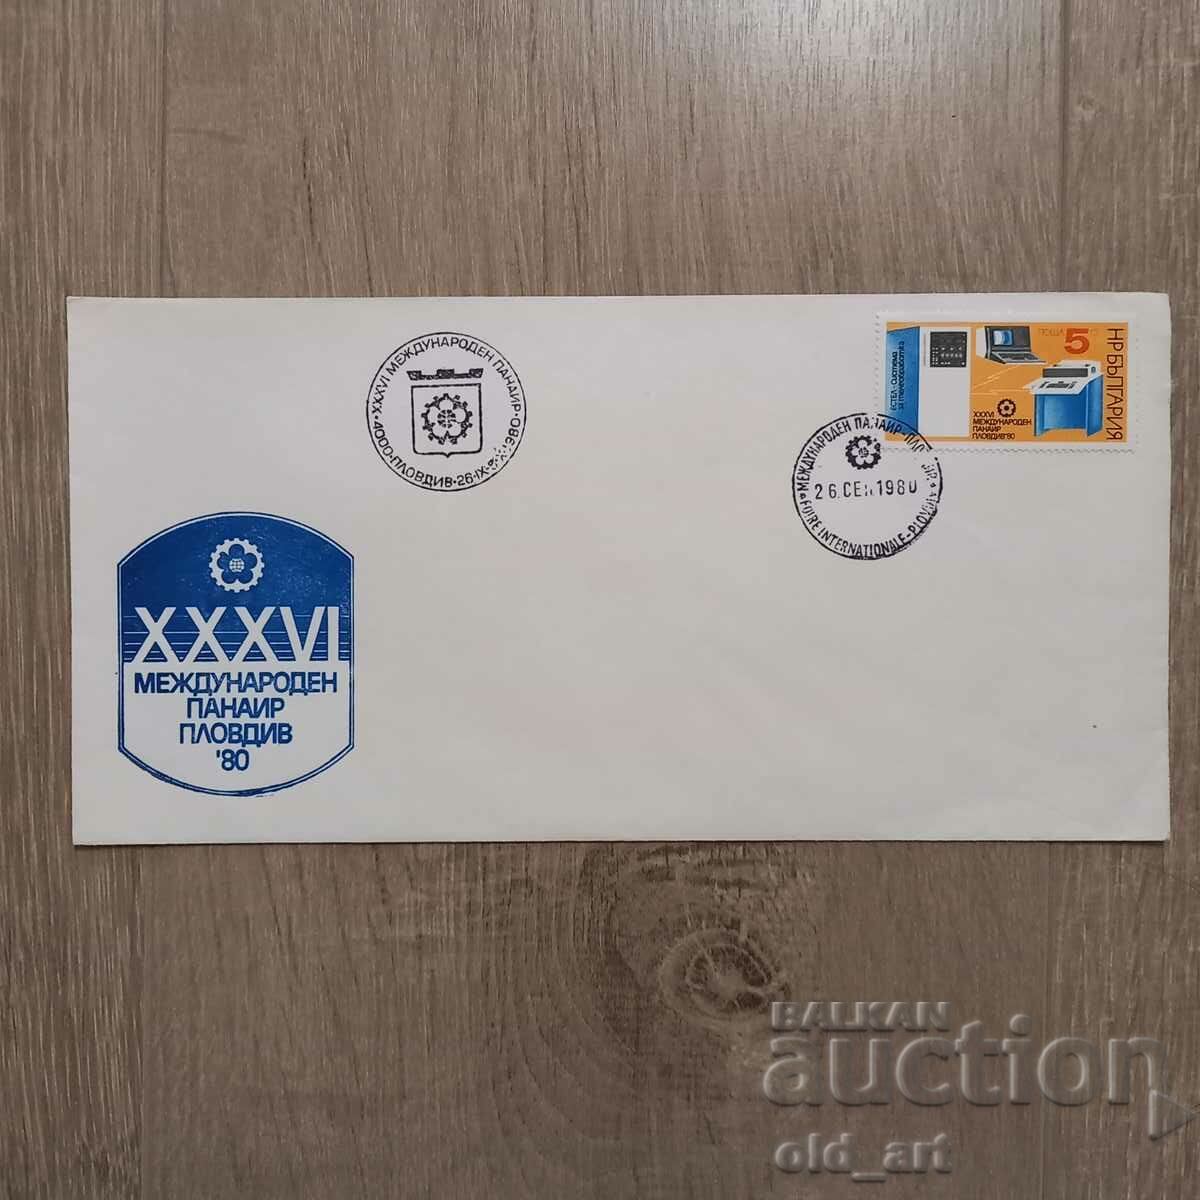 Plic poștal - XXXVI Târgul Internațional Plovdiv 80